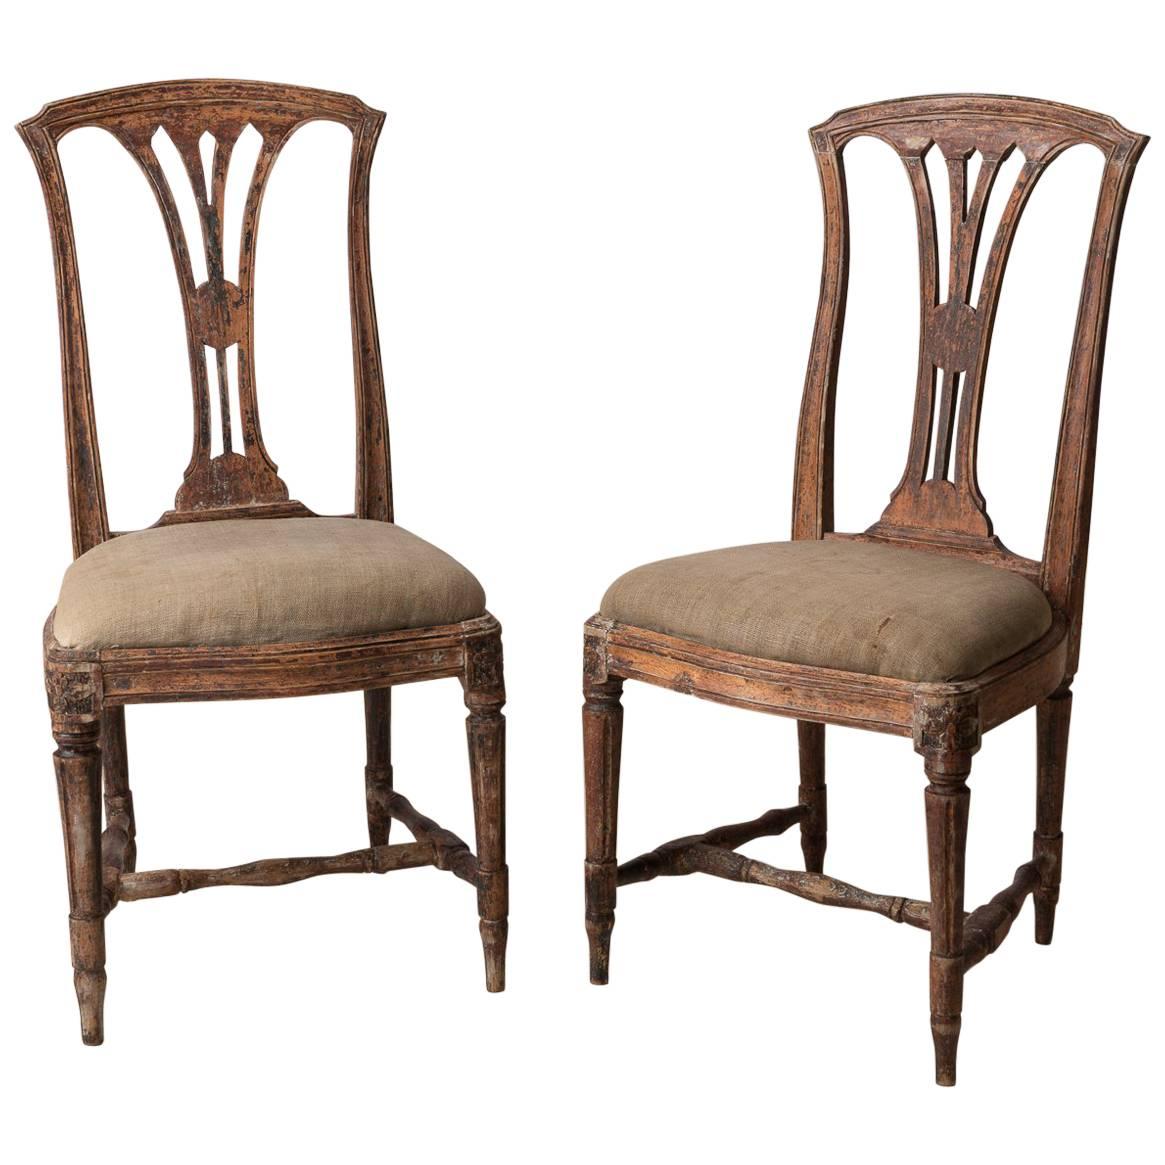 Pair of Late 1700s Swedish Gustavian Chairs